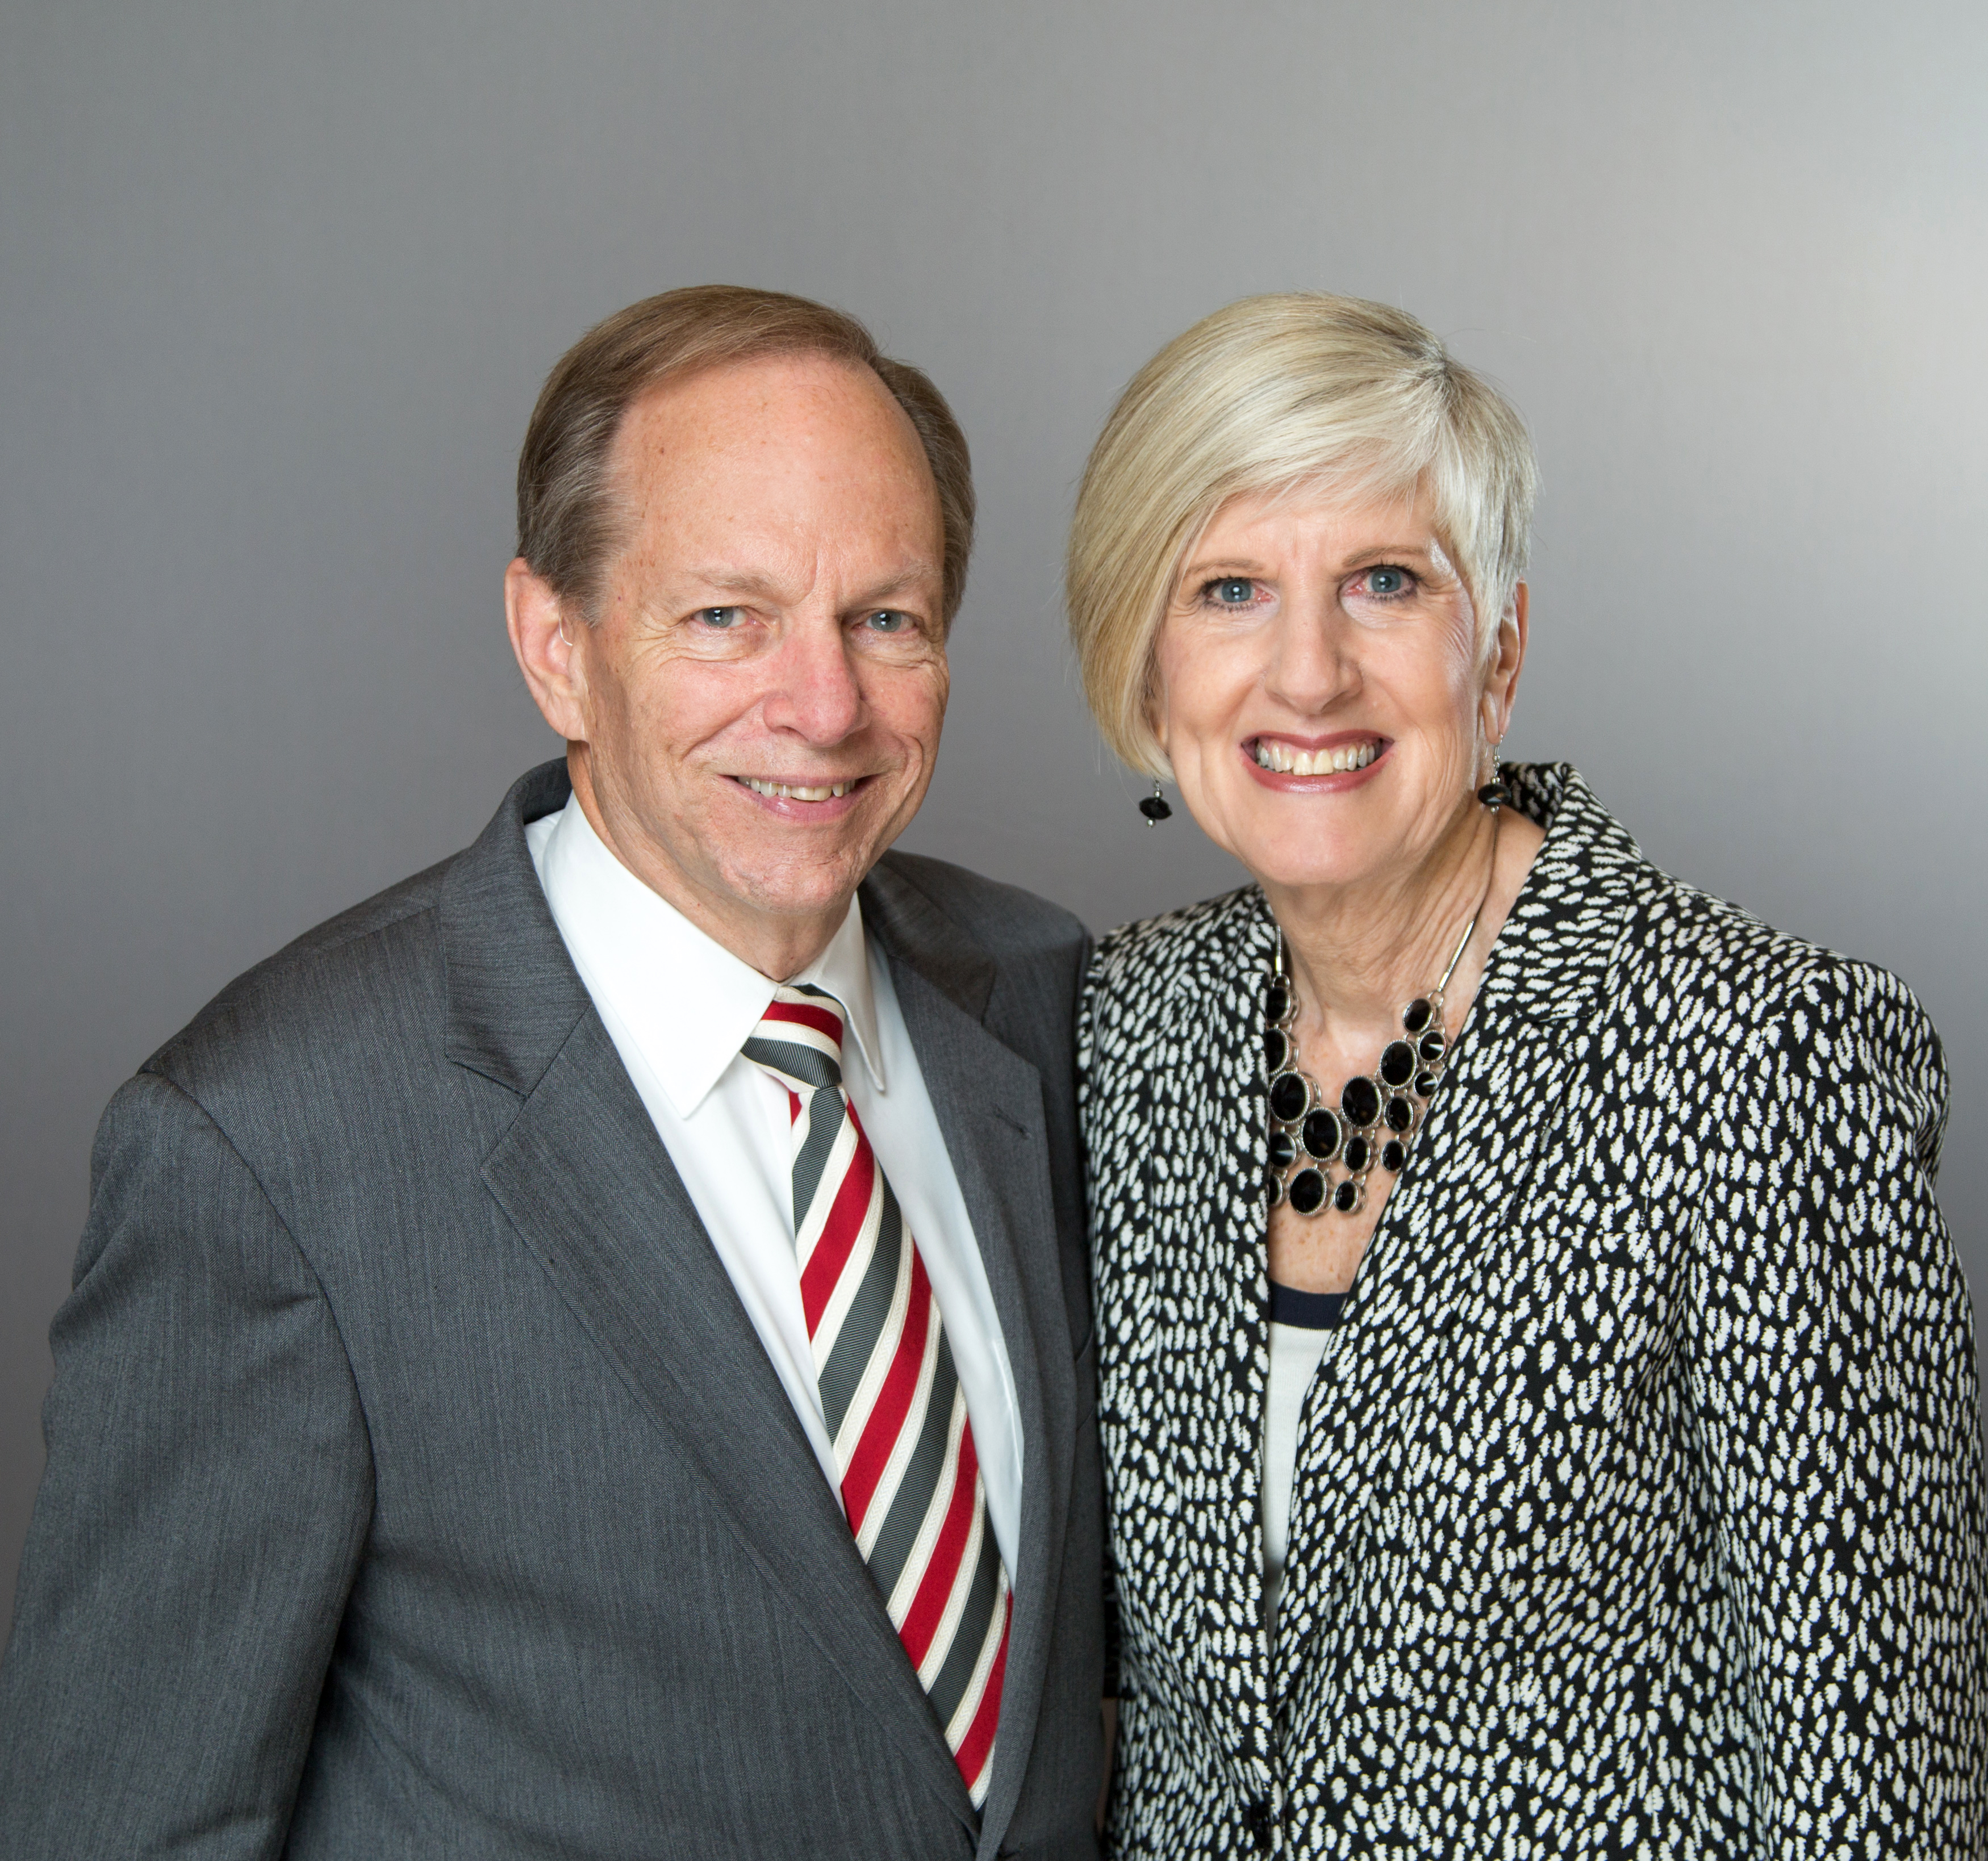 Bonvera Profiles in Leadership: Jim & Kathy Paullin